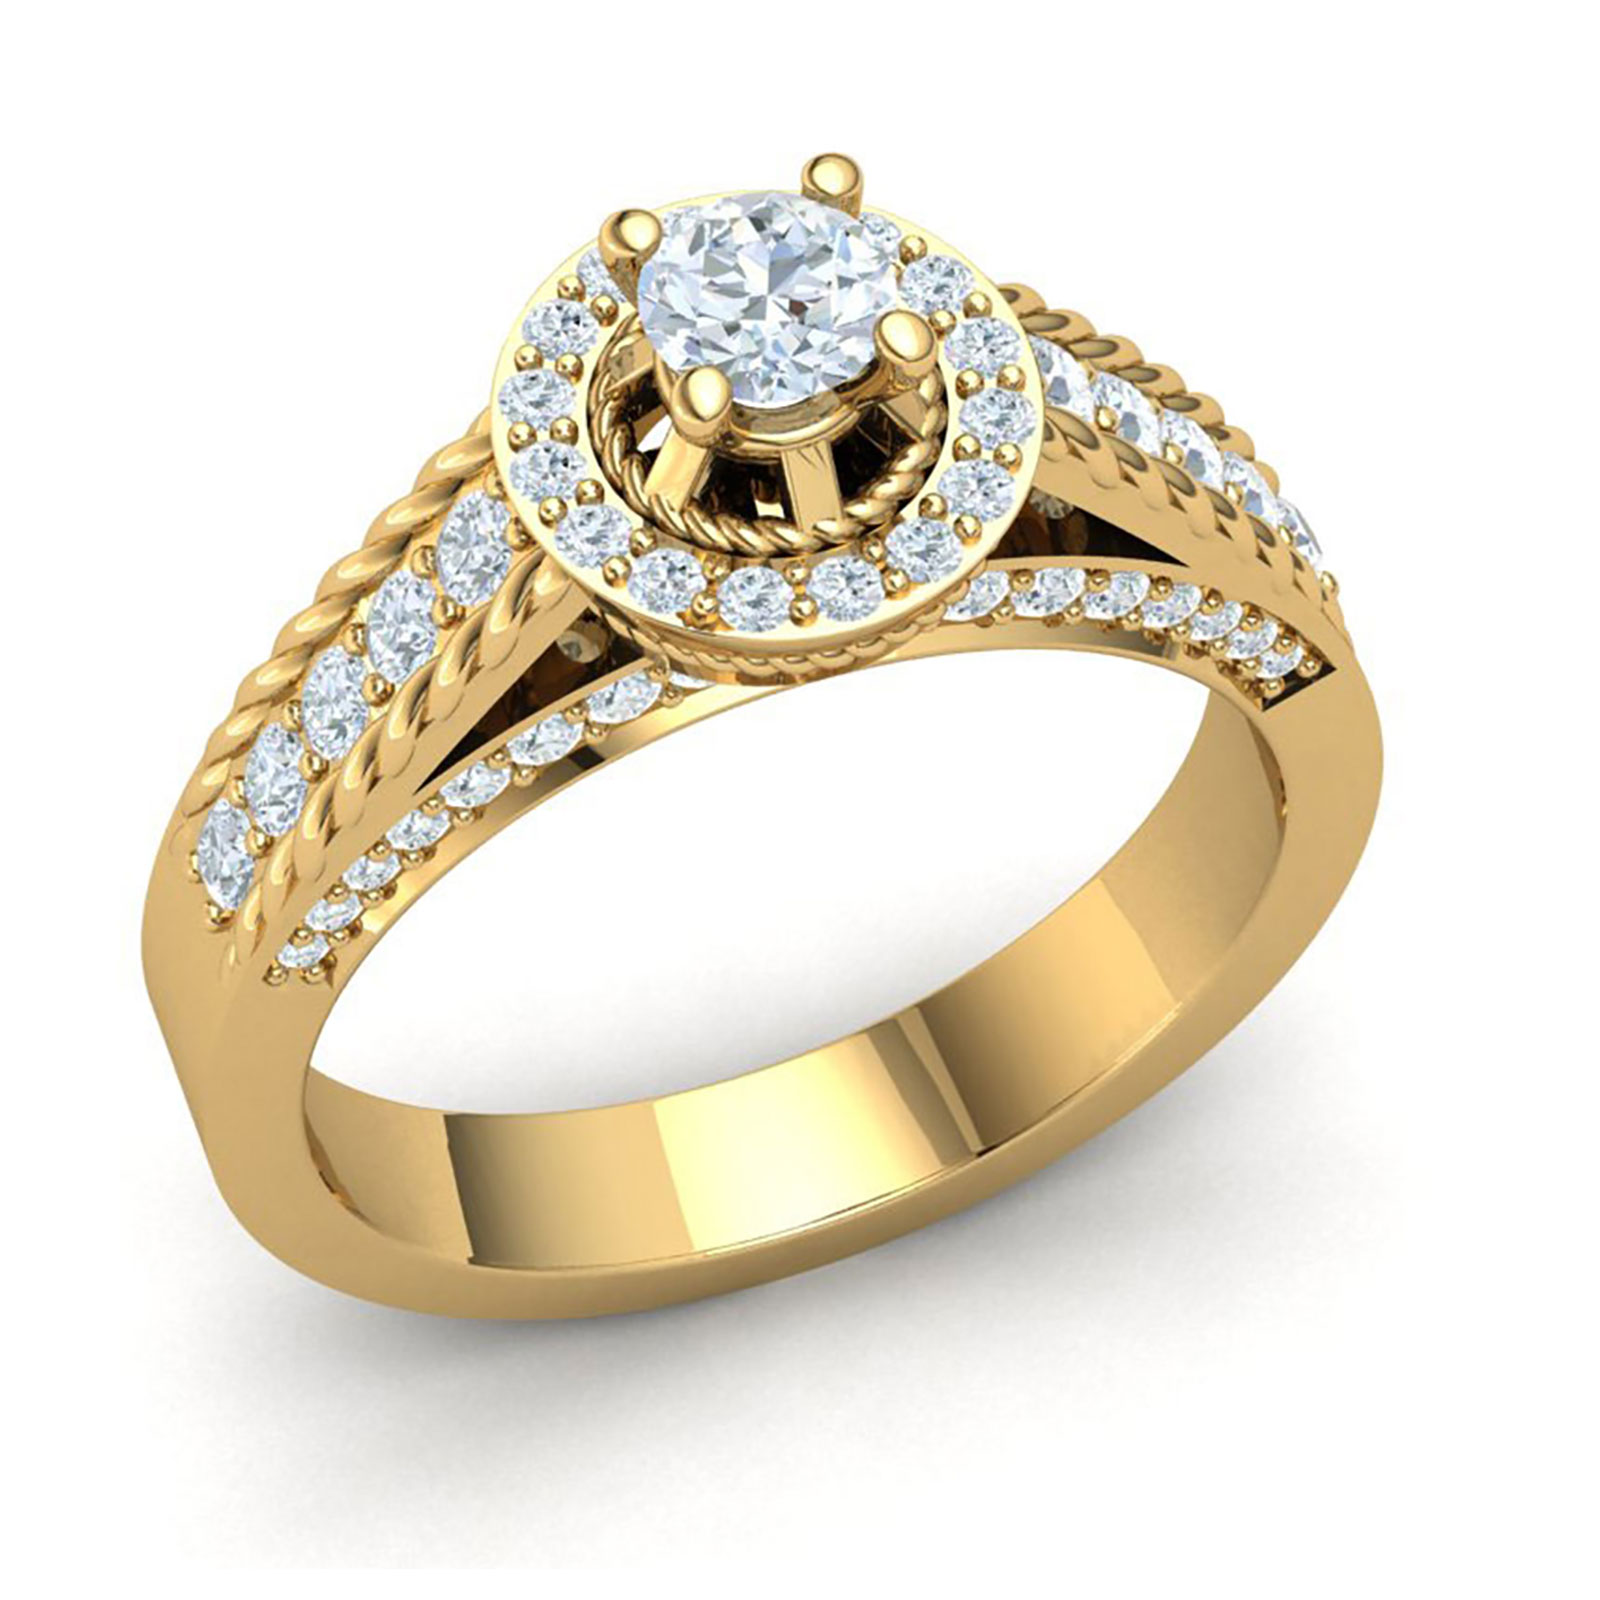 Jewel We Sell 1carat Round Cut Diamond Bridal Cathedral Halo Engagement Ring Anniversary Band 18K Yellow Gold FG VS2